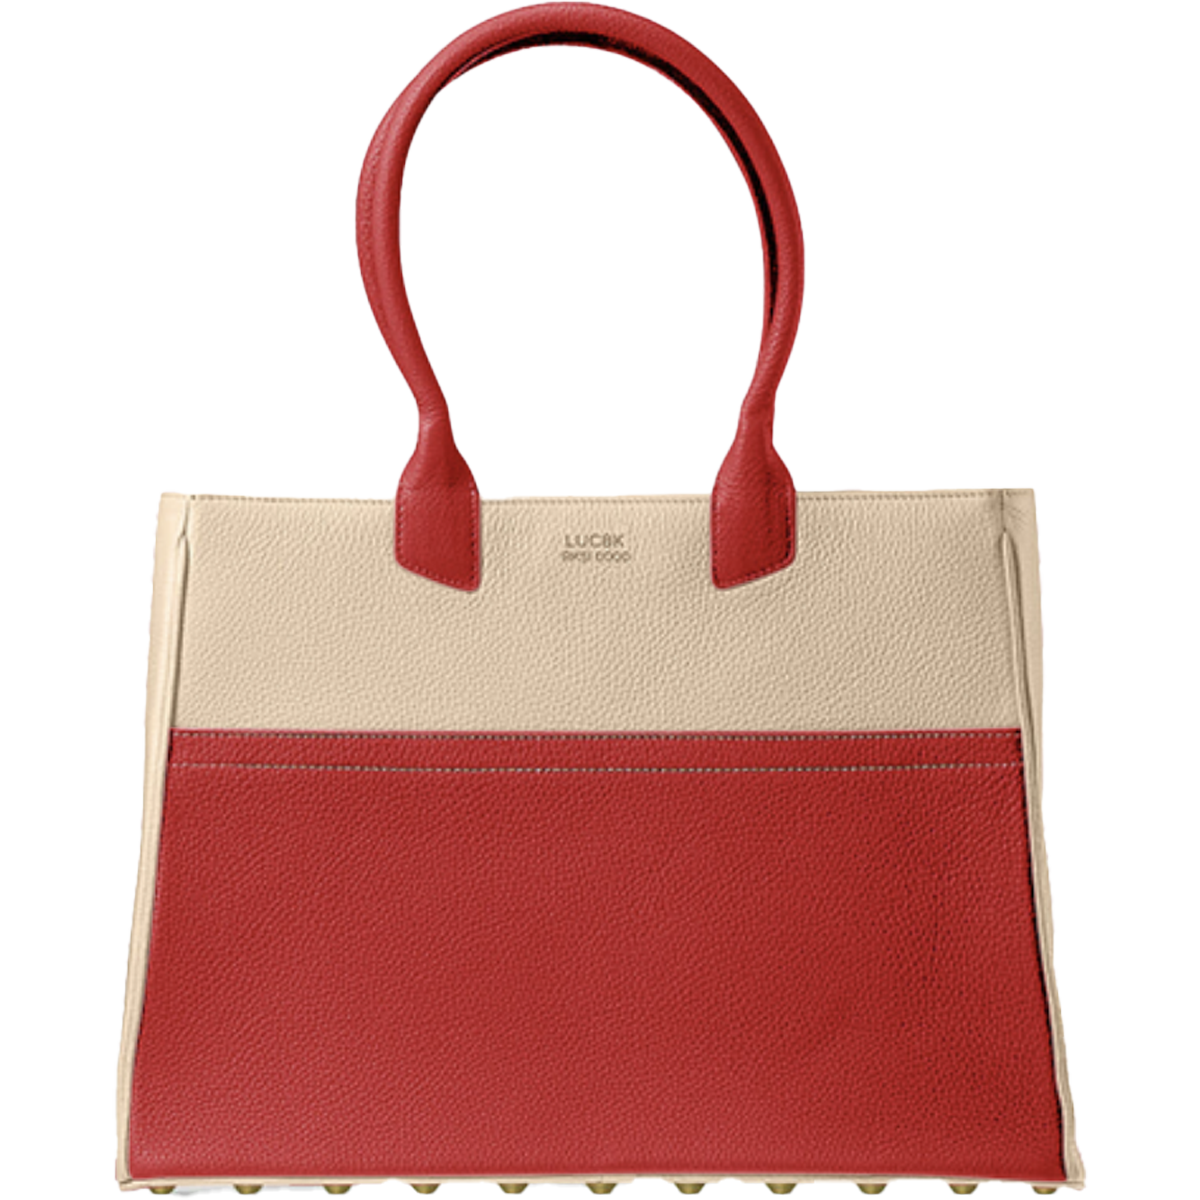 Leather Tote Handbag - LUC8K Co